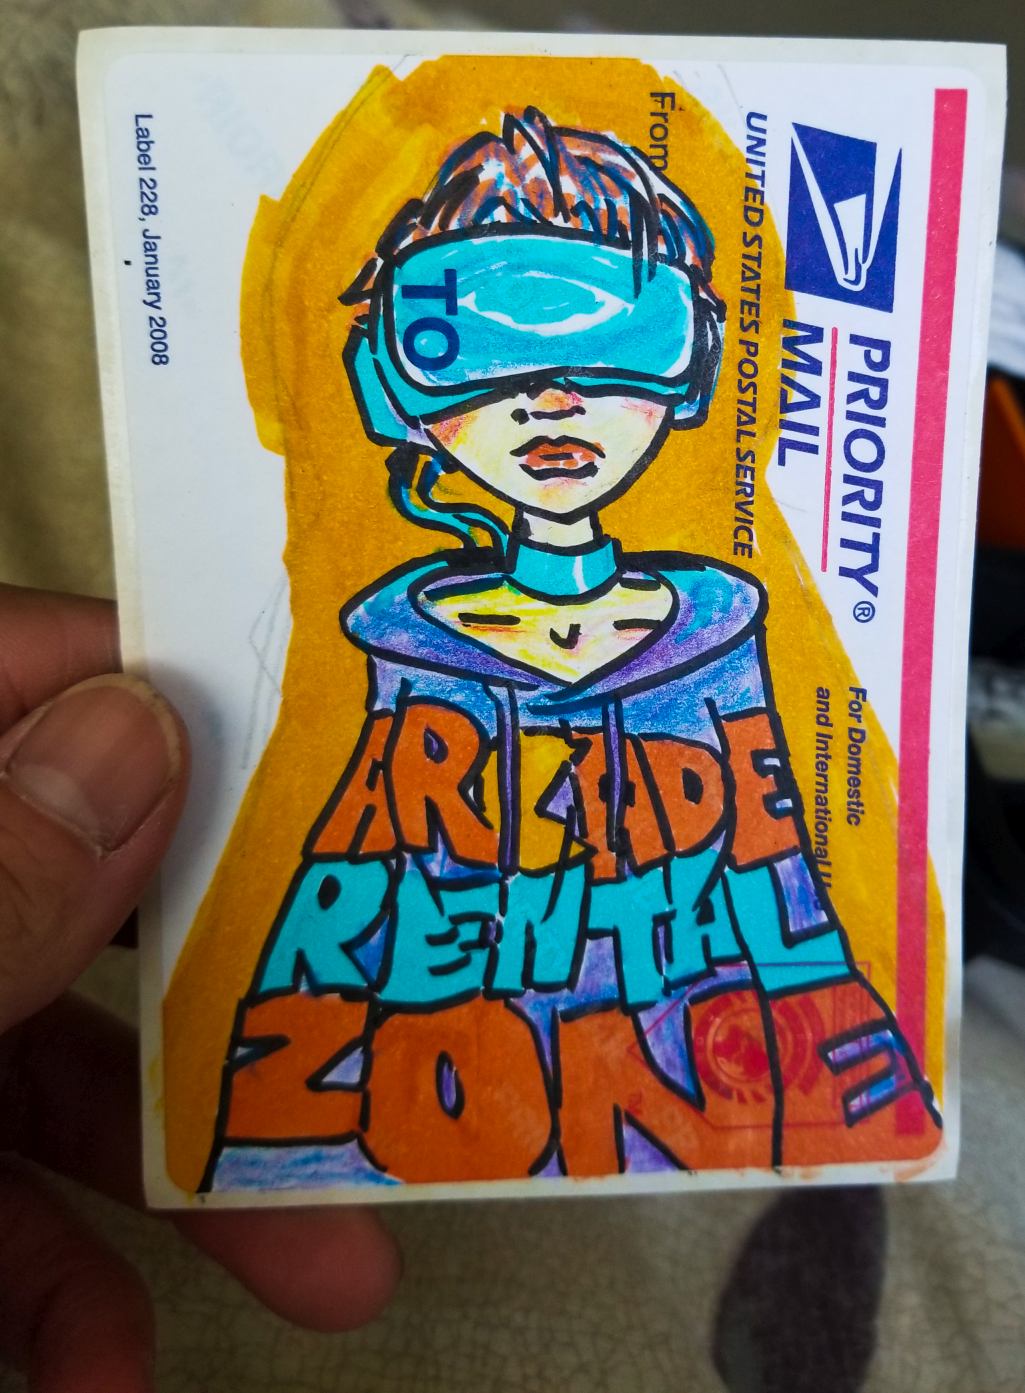 arcade rental zone VR girl on mailing label